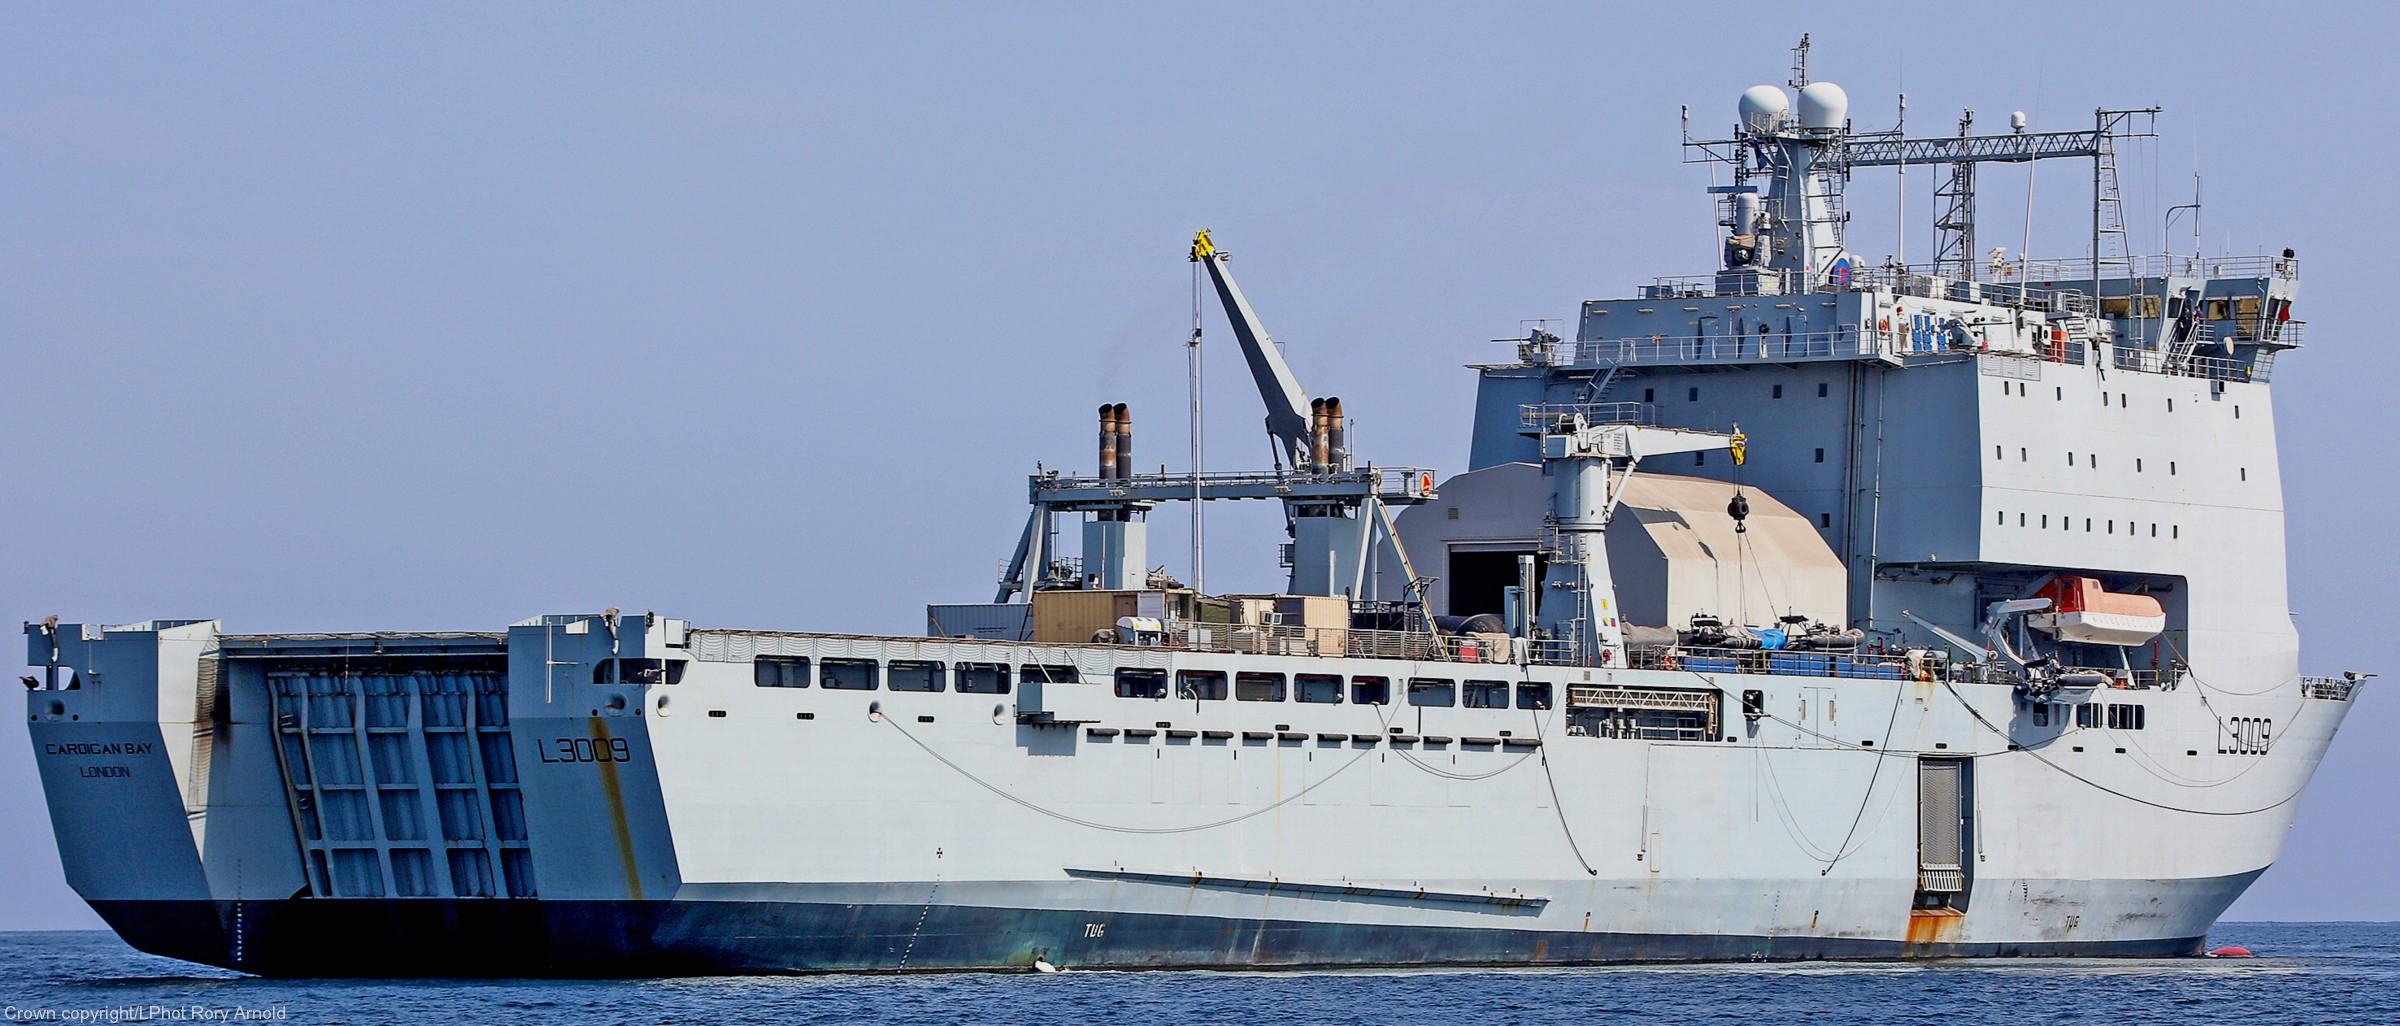 l-3009 rfa cardigan bay dock landing ship lsd royal fleet auxilary navy 20